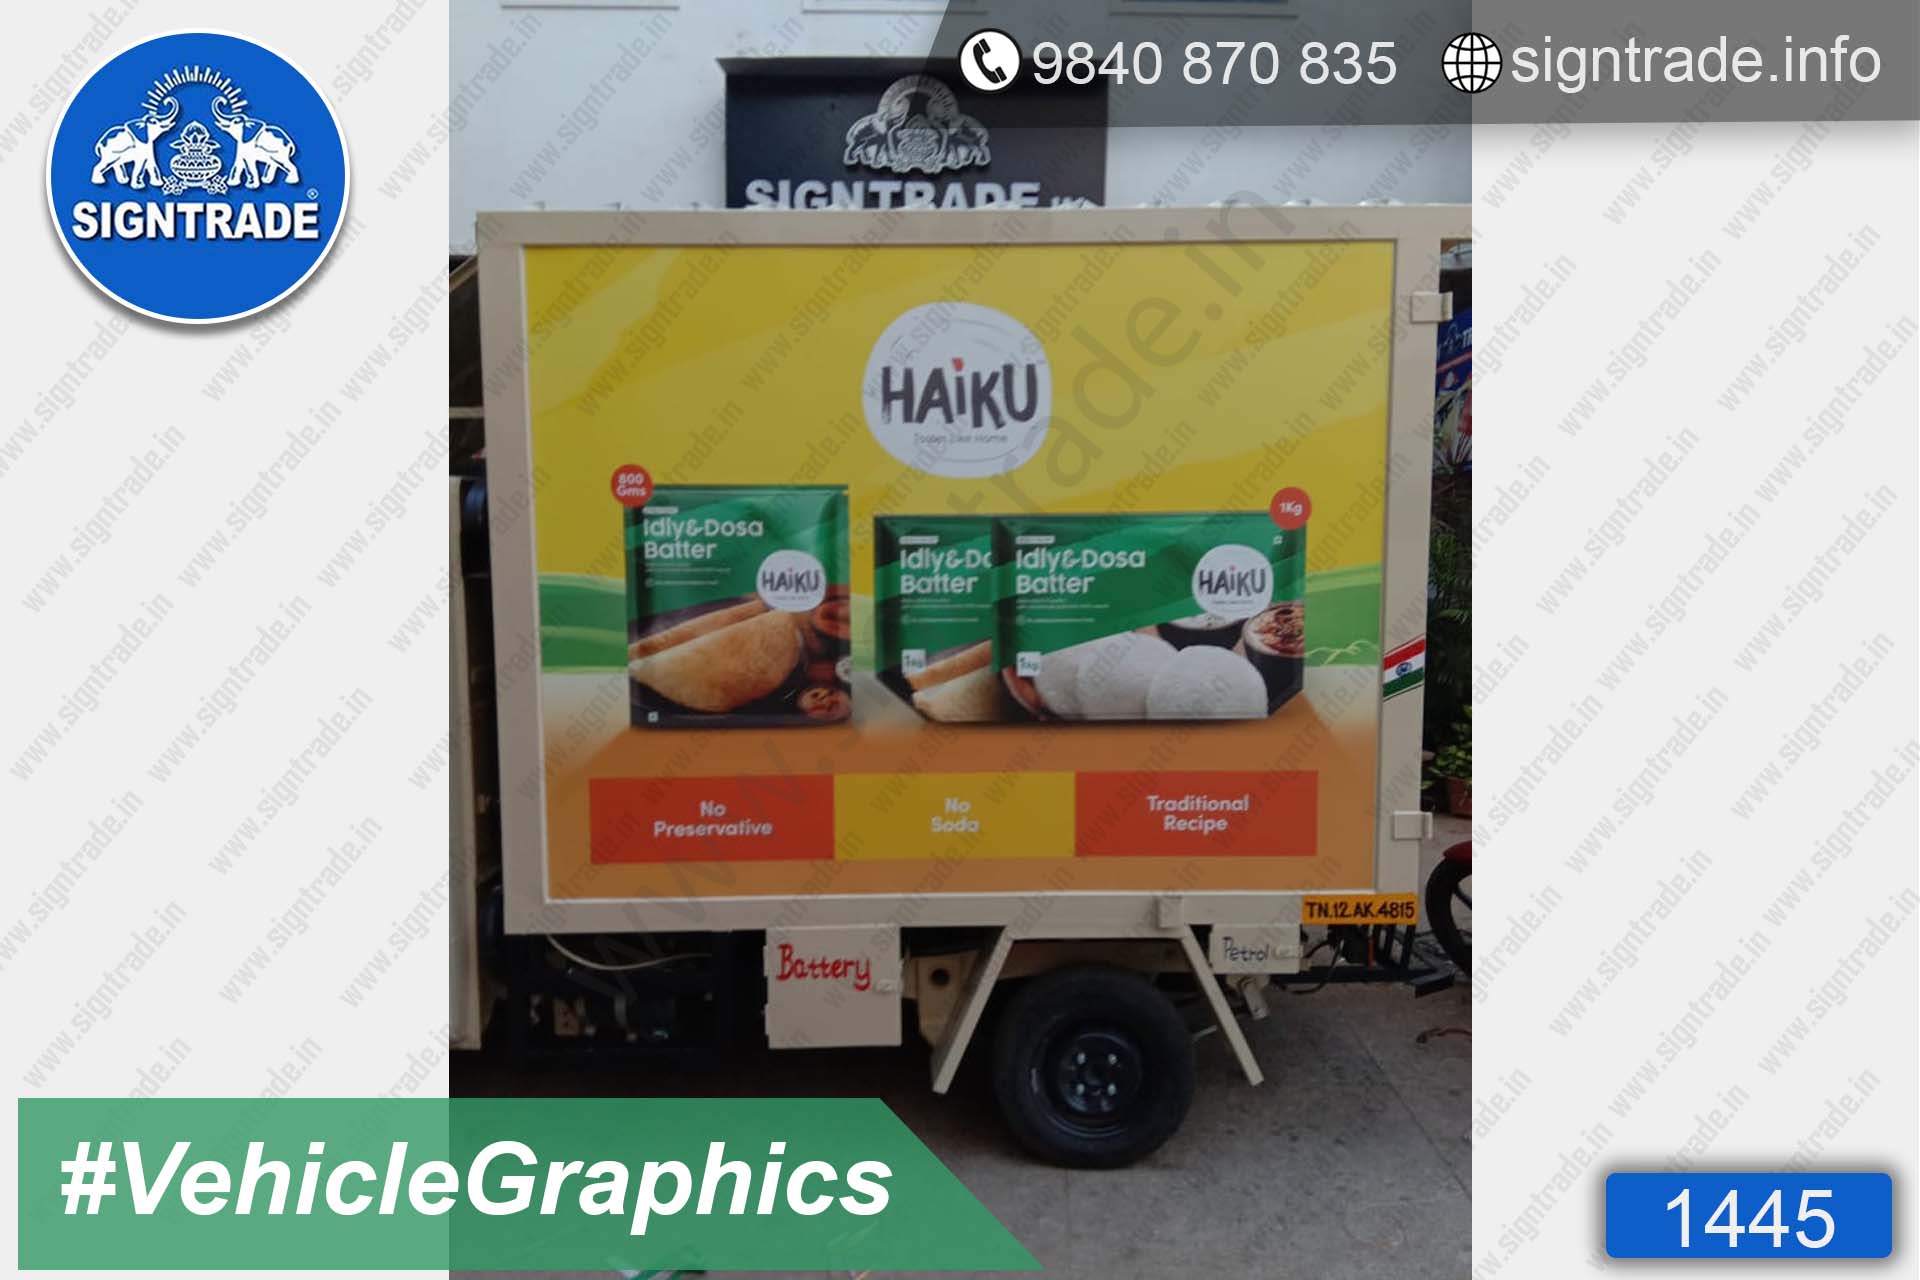 Haiku tastes like home - 1445, Vehicle Graphics, Vehicle Wrapping, Vehicle Branding, Vinyl Vehicle Branding, Van Graphics, Van Wrapping, Van Branding, Vinyl Van Branding, Car Graphics, Car Wrapping, Car Branding, Vinyl Car Branding, Car Stickers, Van Car Stickers